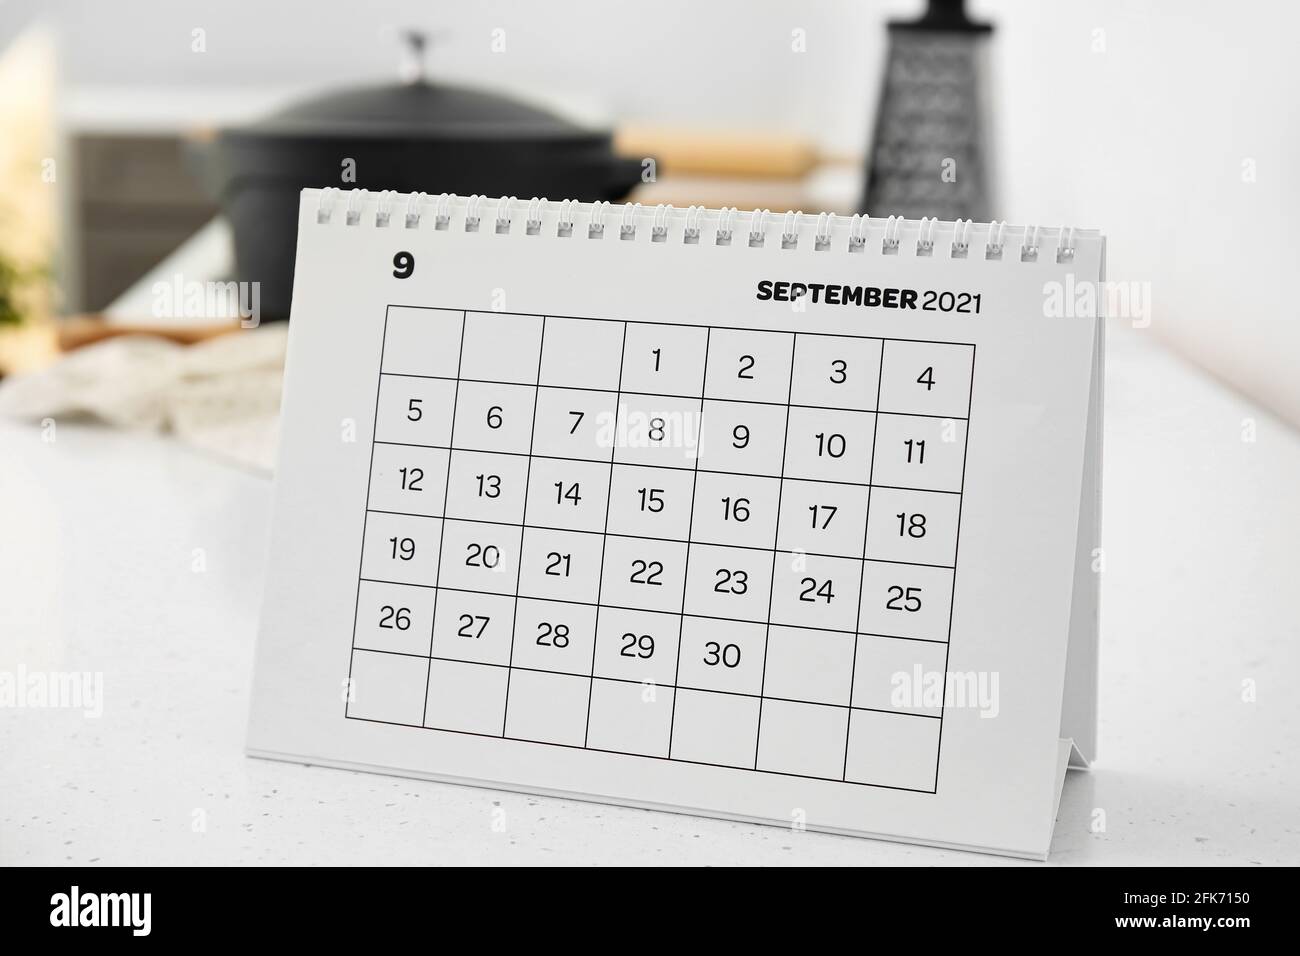 Blank portrait table top flip chart easel binder or calendar